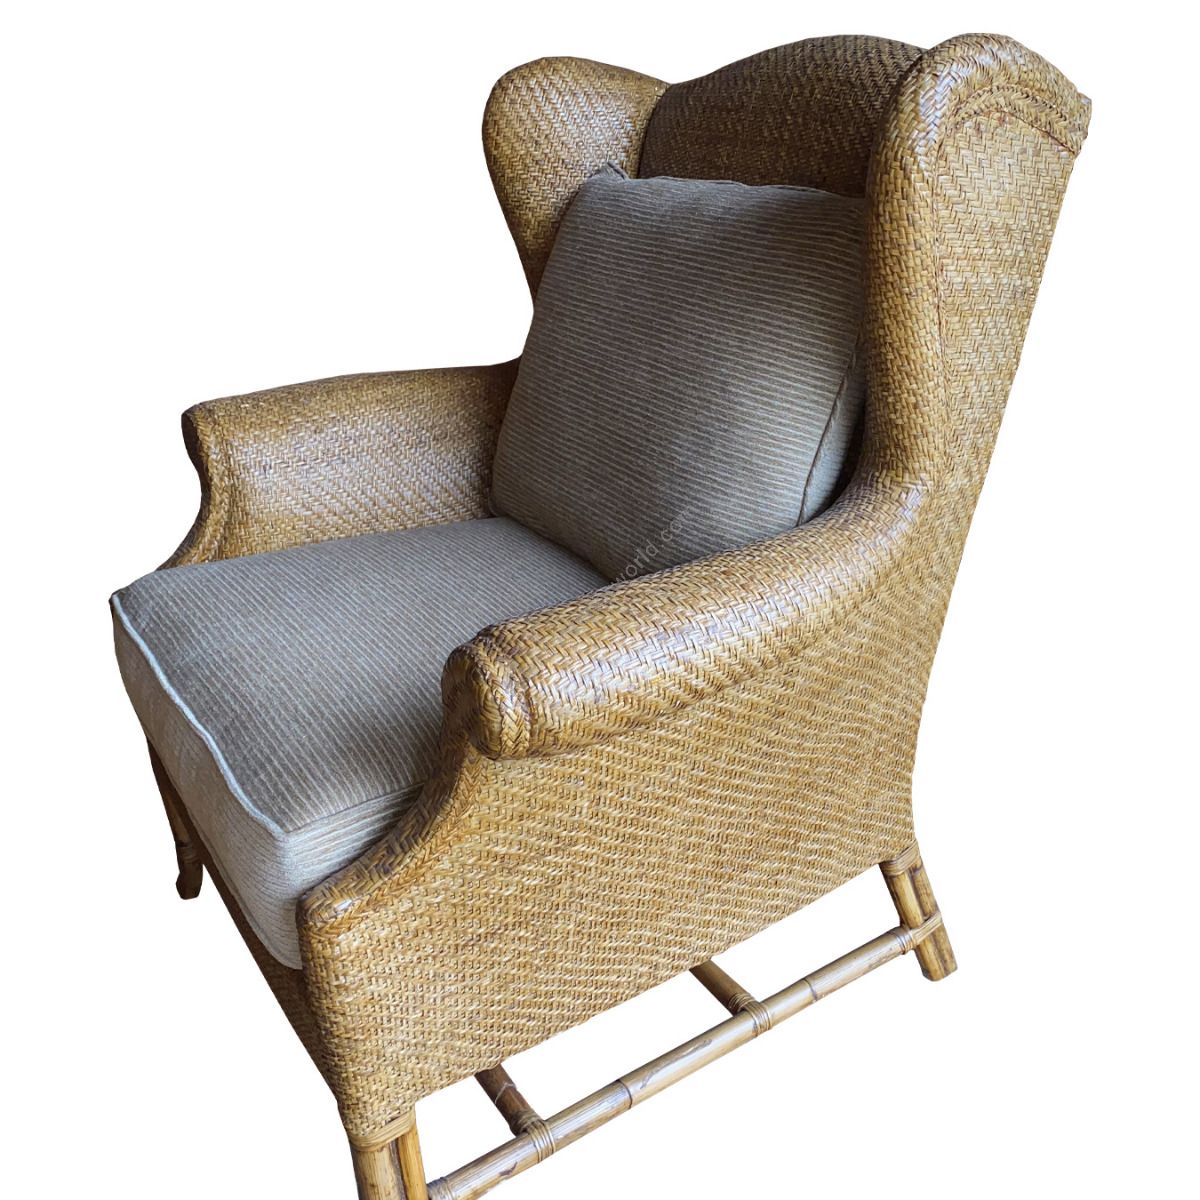 Baker Furniture Rattan Chair 'Milling Road'